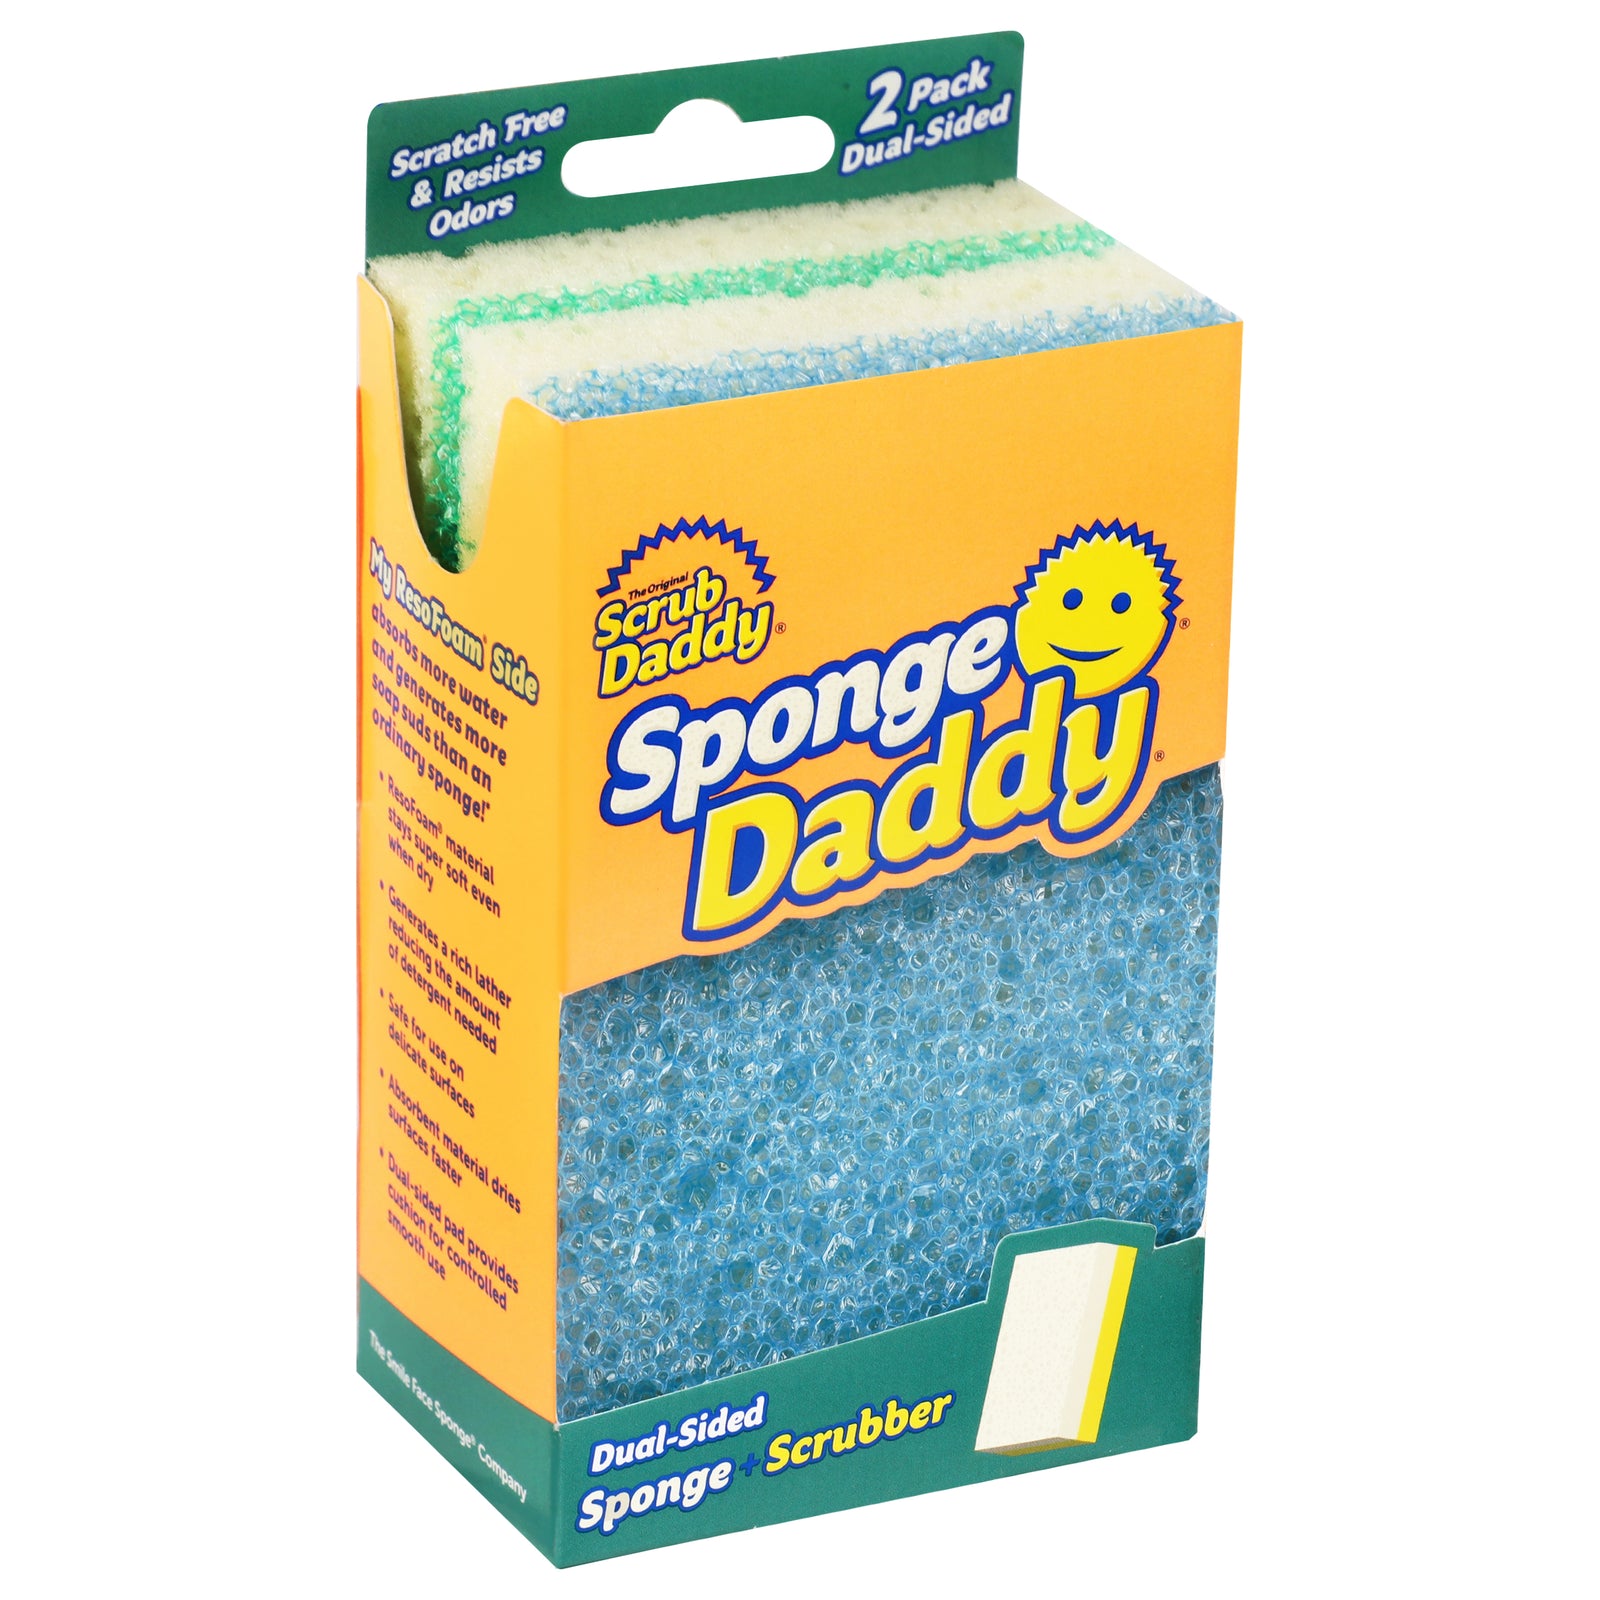 Sponge Daddy 2 piezas (Doble Cara)